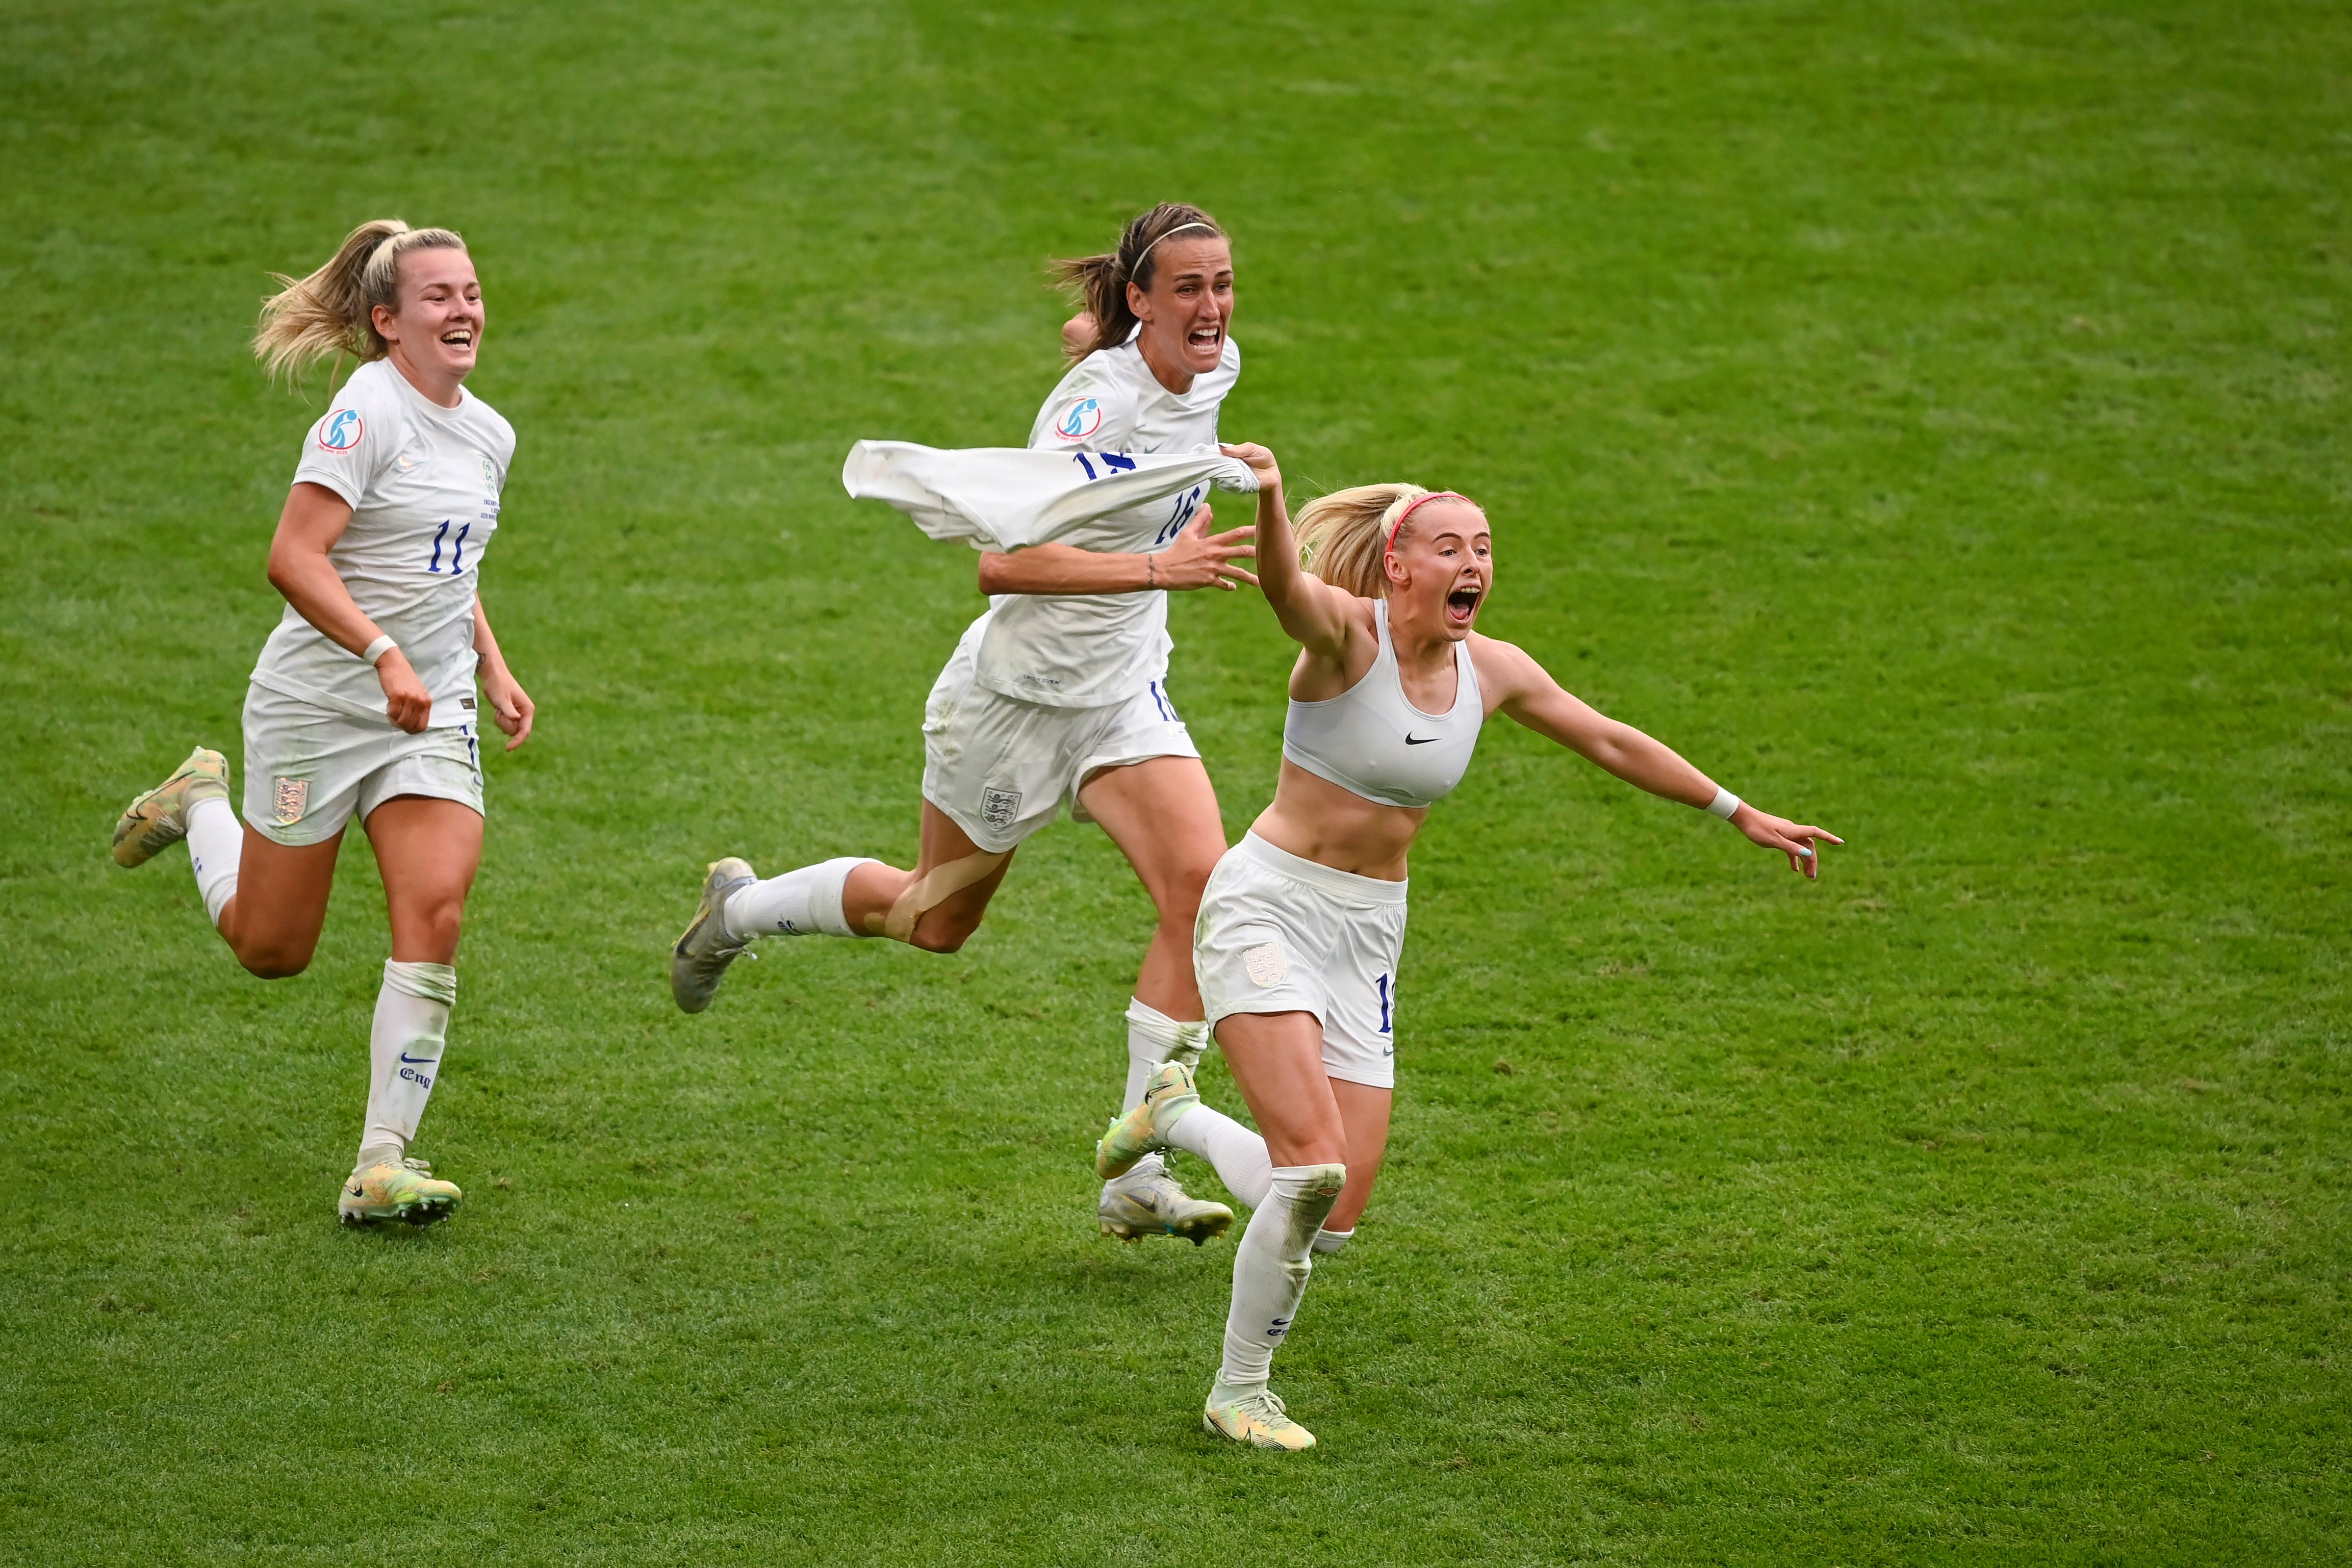 Chloe Kelly celebrates scoring the winning goal with England teammates Lauren Hemp and Jill Scott during the Uefa Women’s Euro 2022 final at Wembley